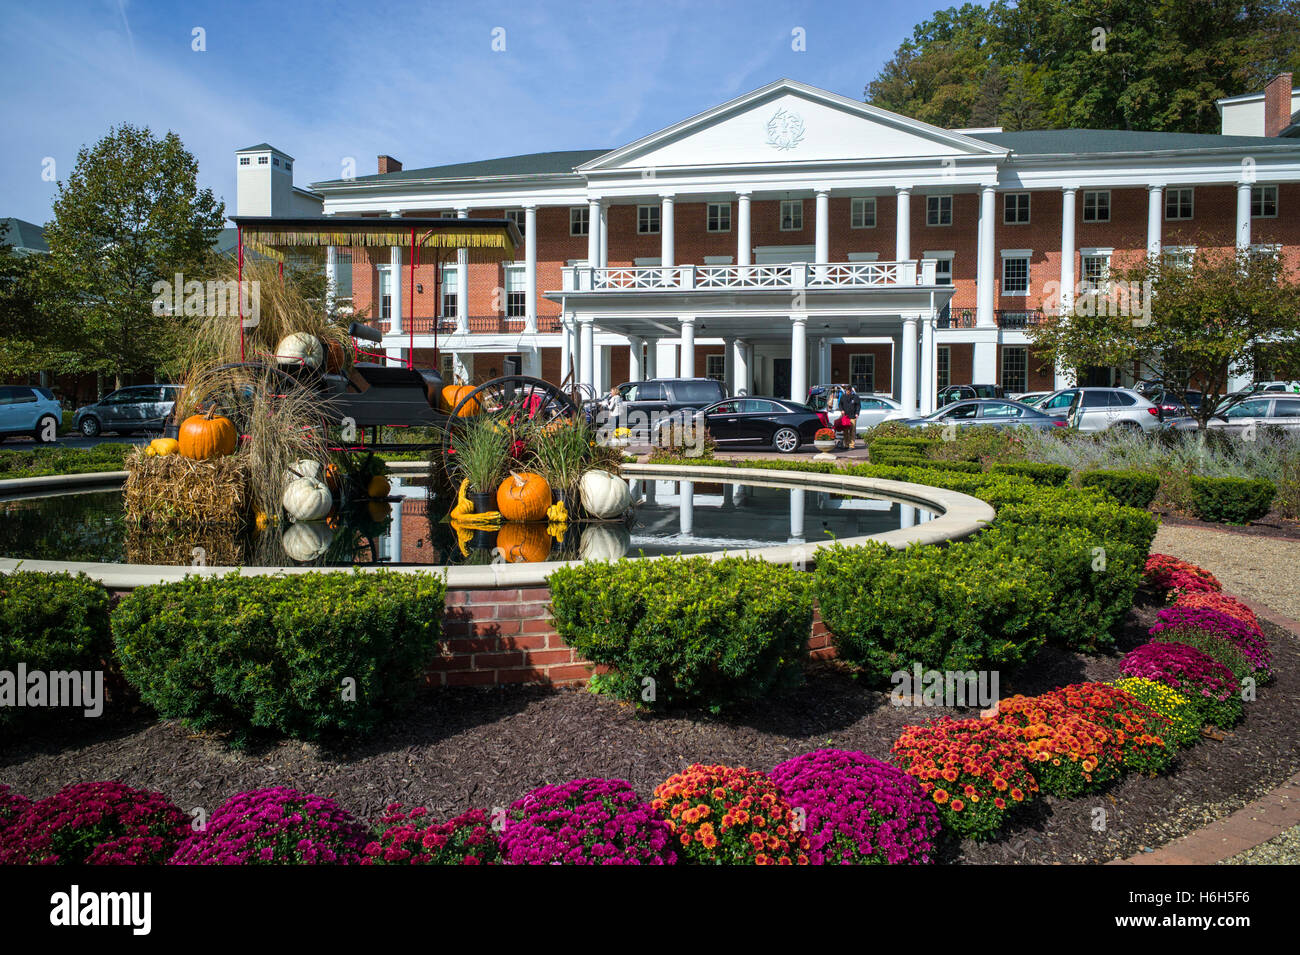 Vista esterna del inn; chiara giornata di sole; Omni Bedford Springs Resort & Spa; Bedford; Pennsylvania; USA Foto Stock